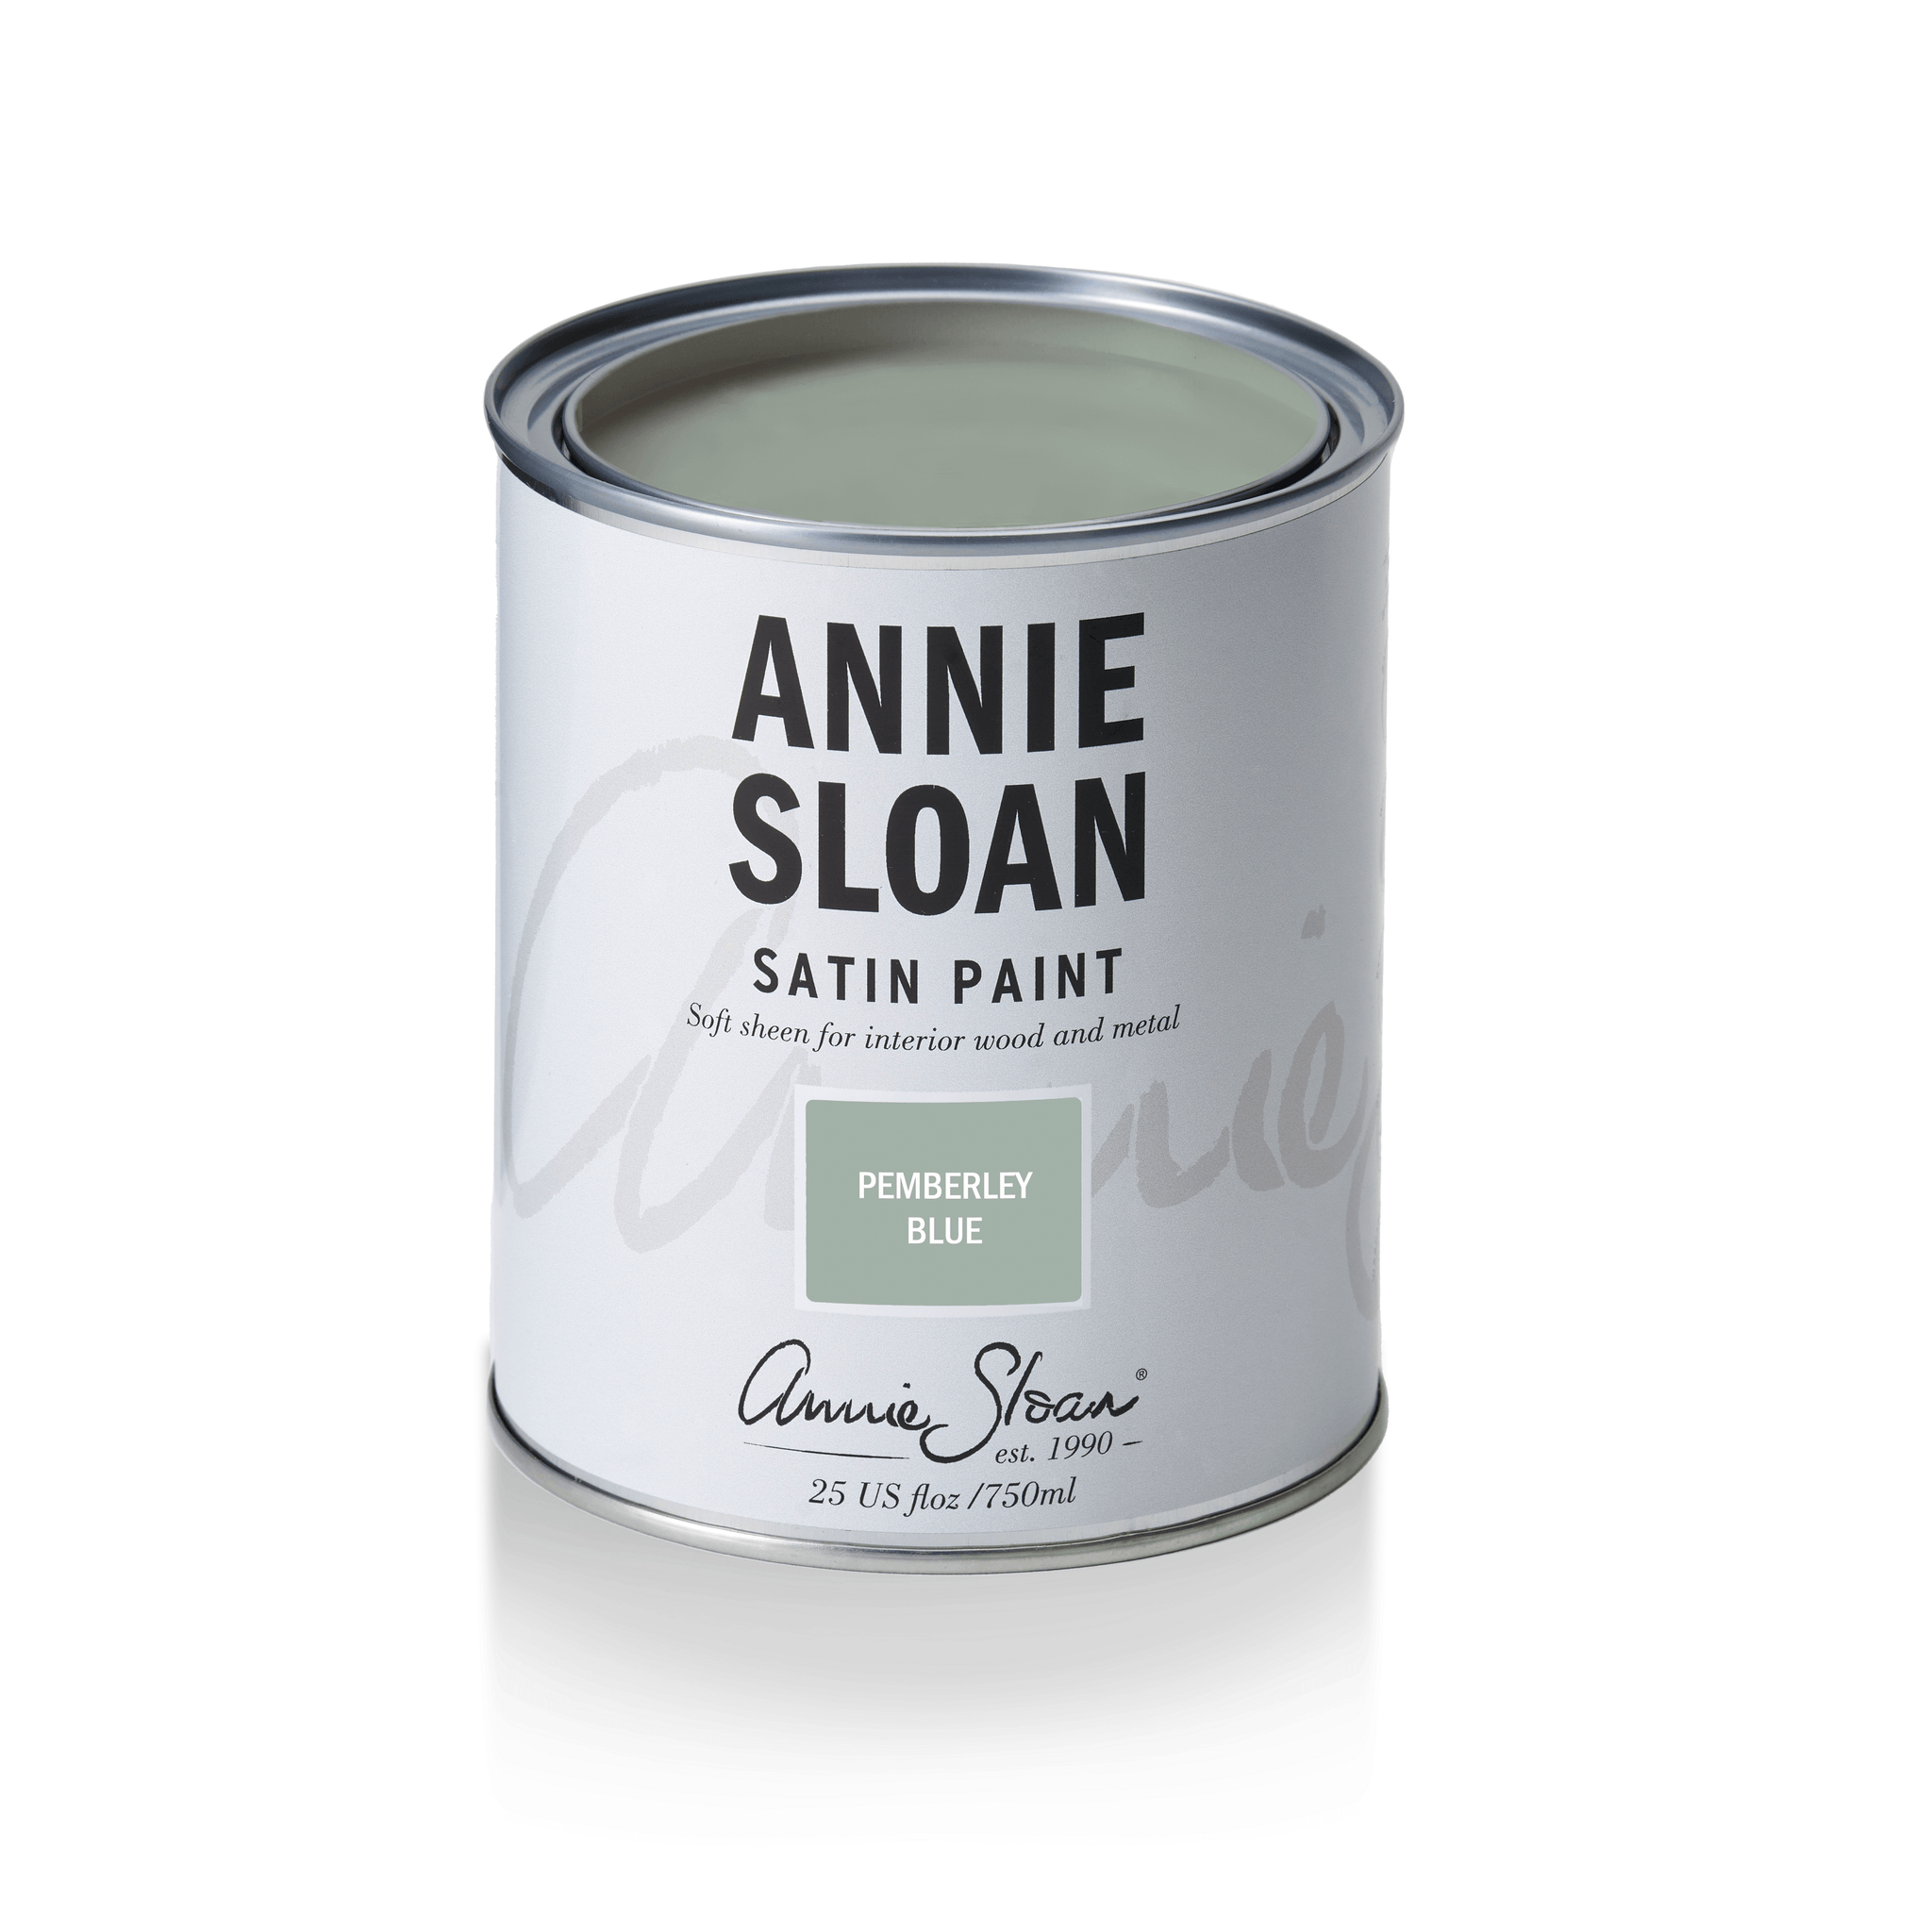 Annie Sloan Satin Paint Pemberley Blue - 750 ml - Five and Divine